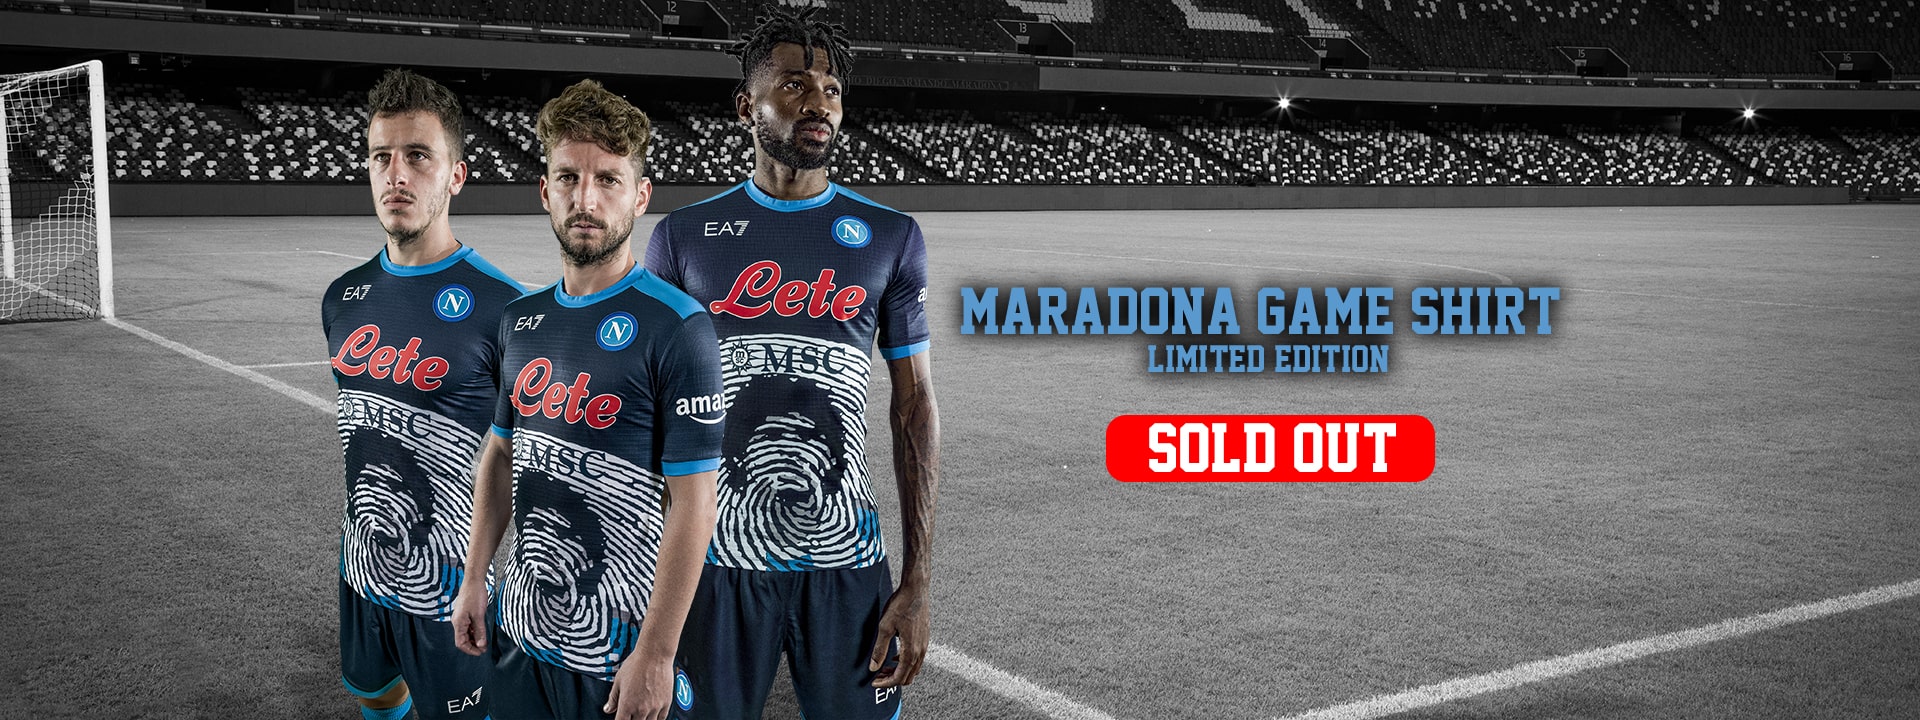 Nuova maglia Maradona sold out